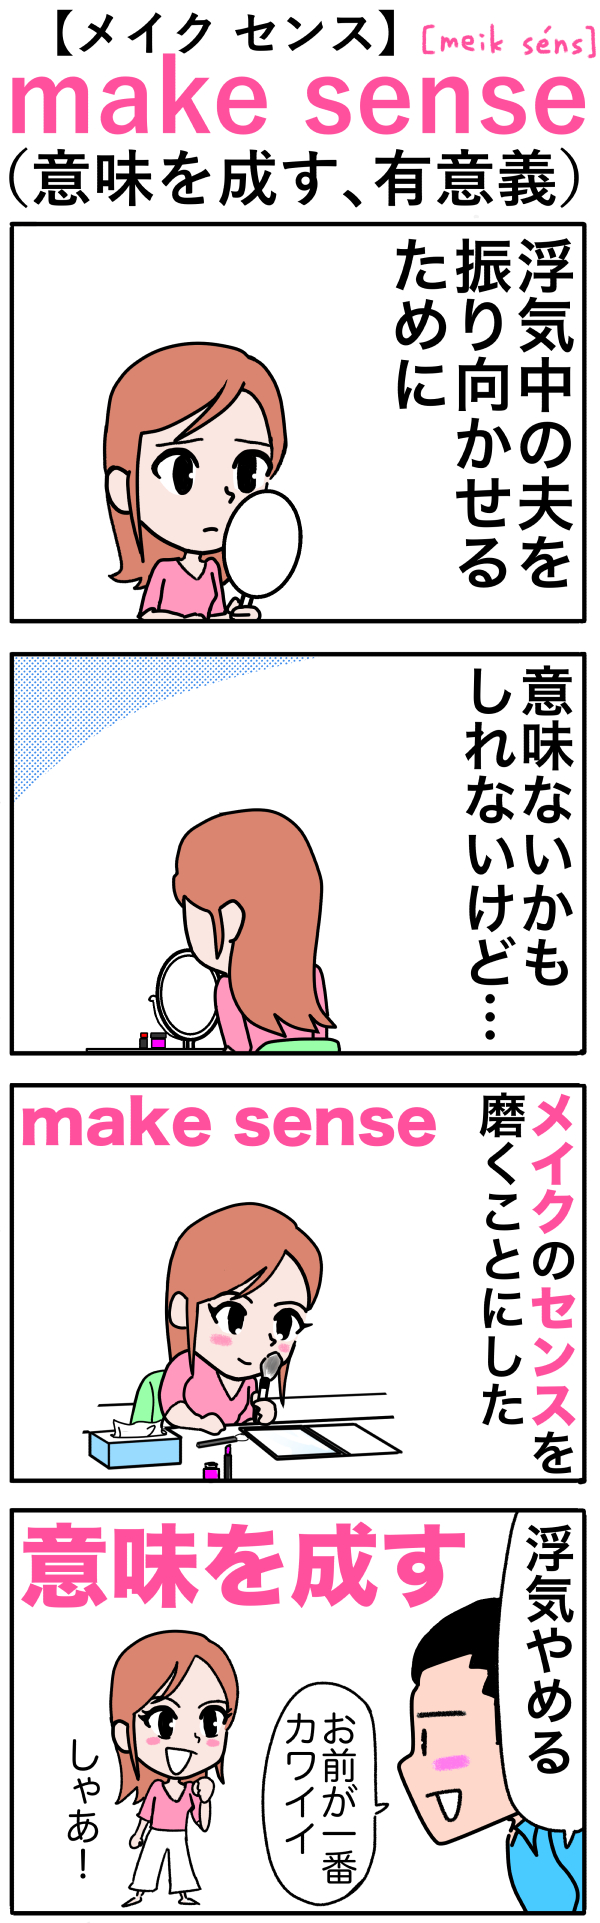 Make Sense メイクのセンスを磨いたら意味を成す 英単語 語呂合わせ4ｺﾏ英単語 語呂合わせ4ｺﾏ